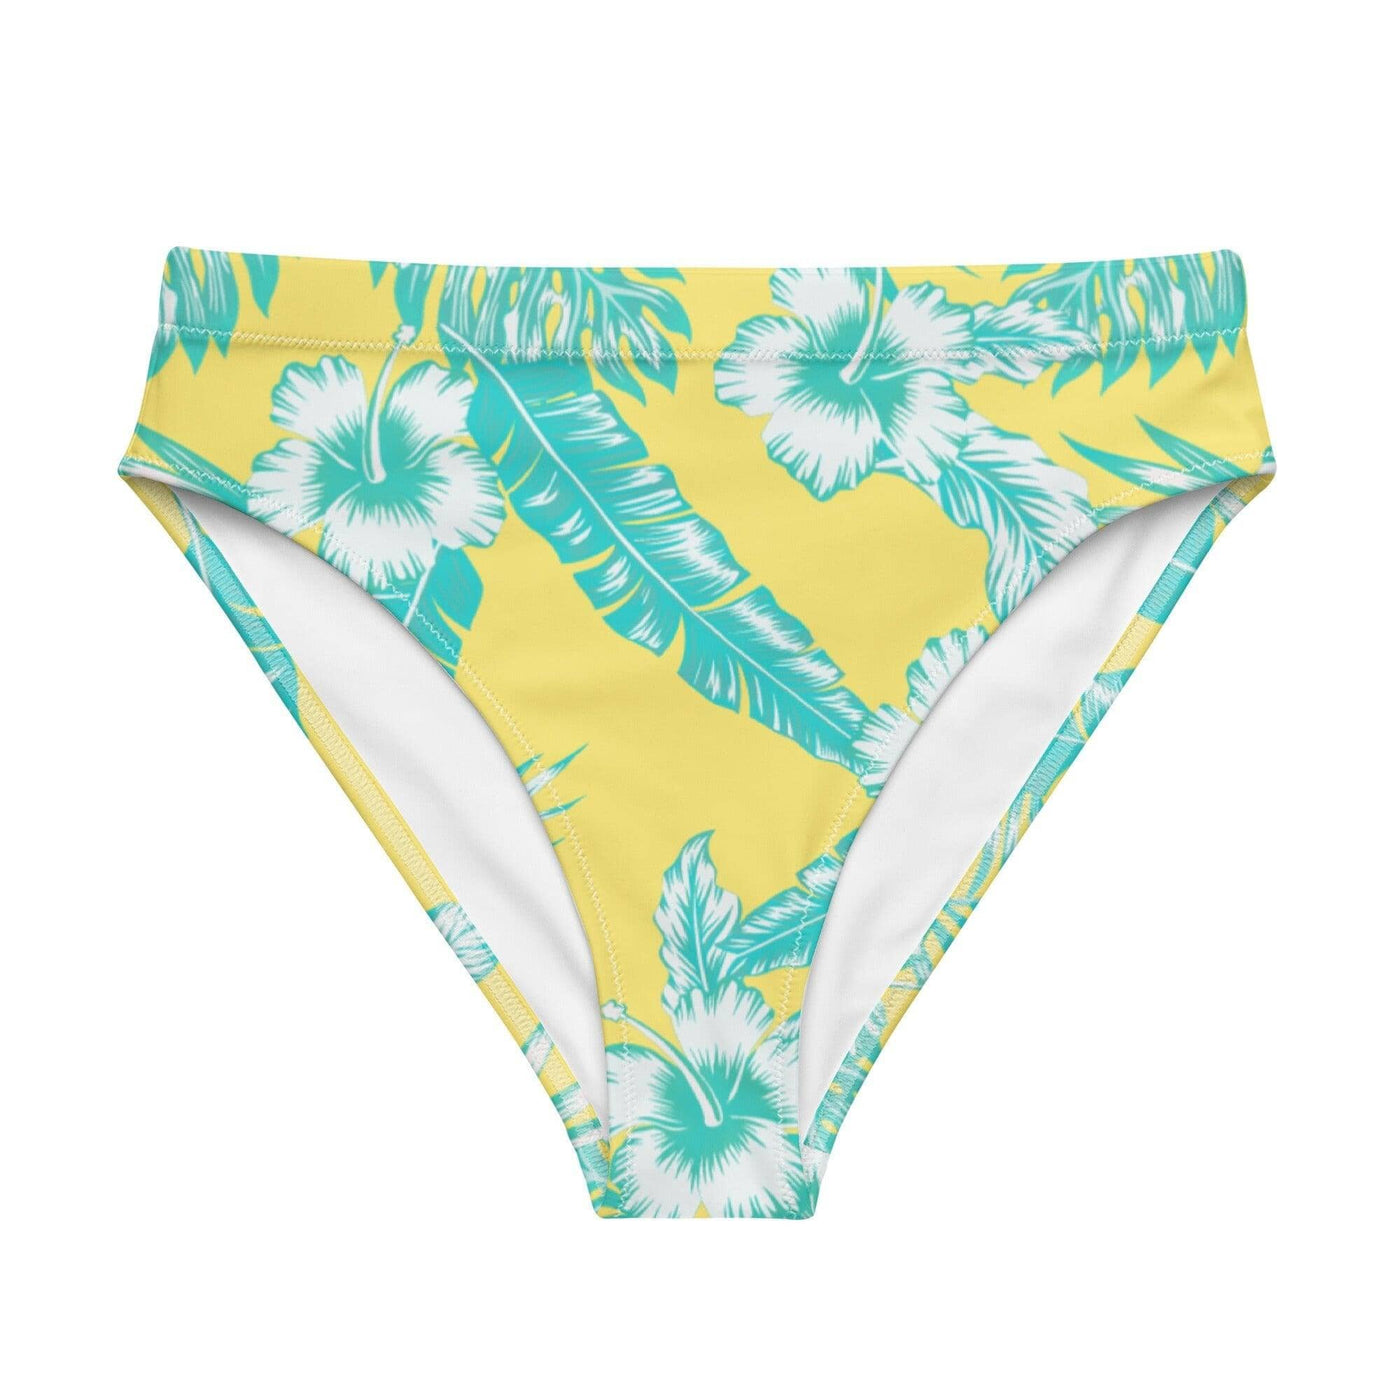 Pawleys Island Bikini Bottom - Coastal Cool - Swimwear and Beachwear - Recycled fabrics